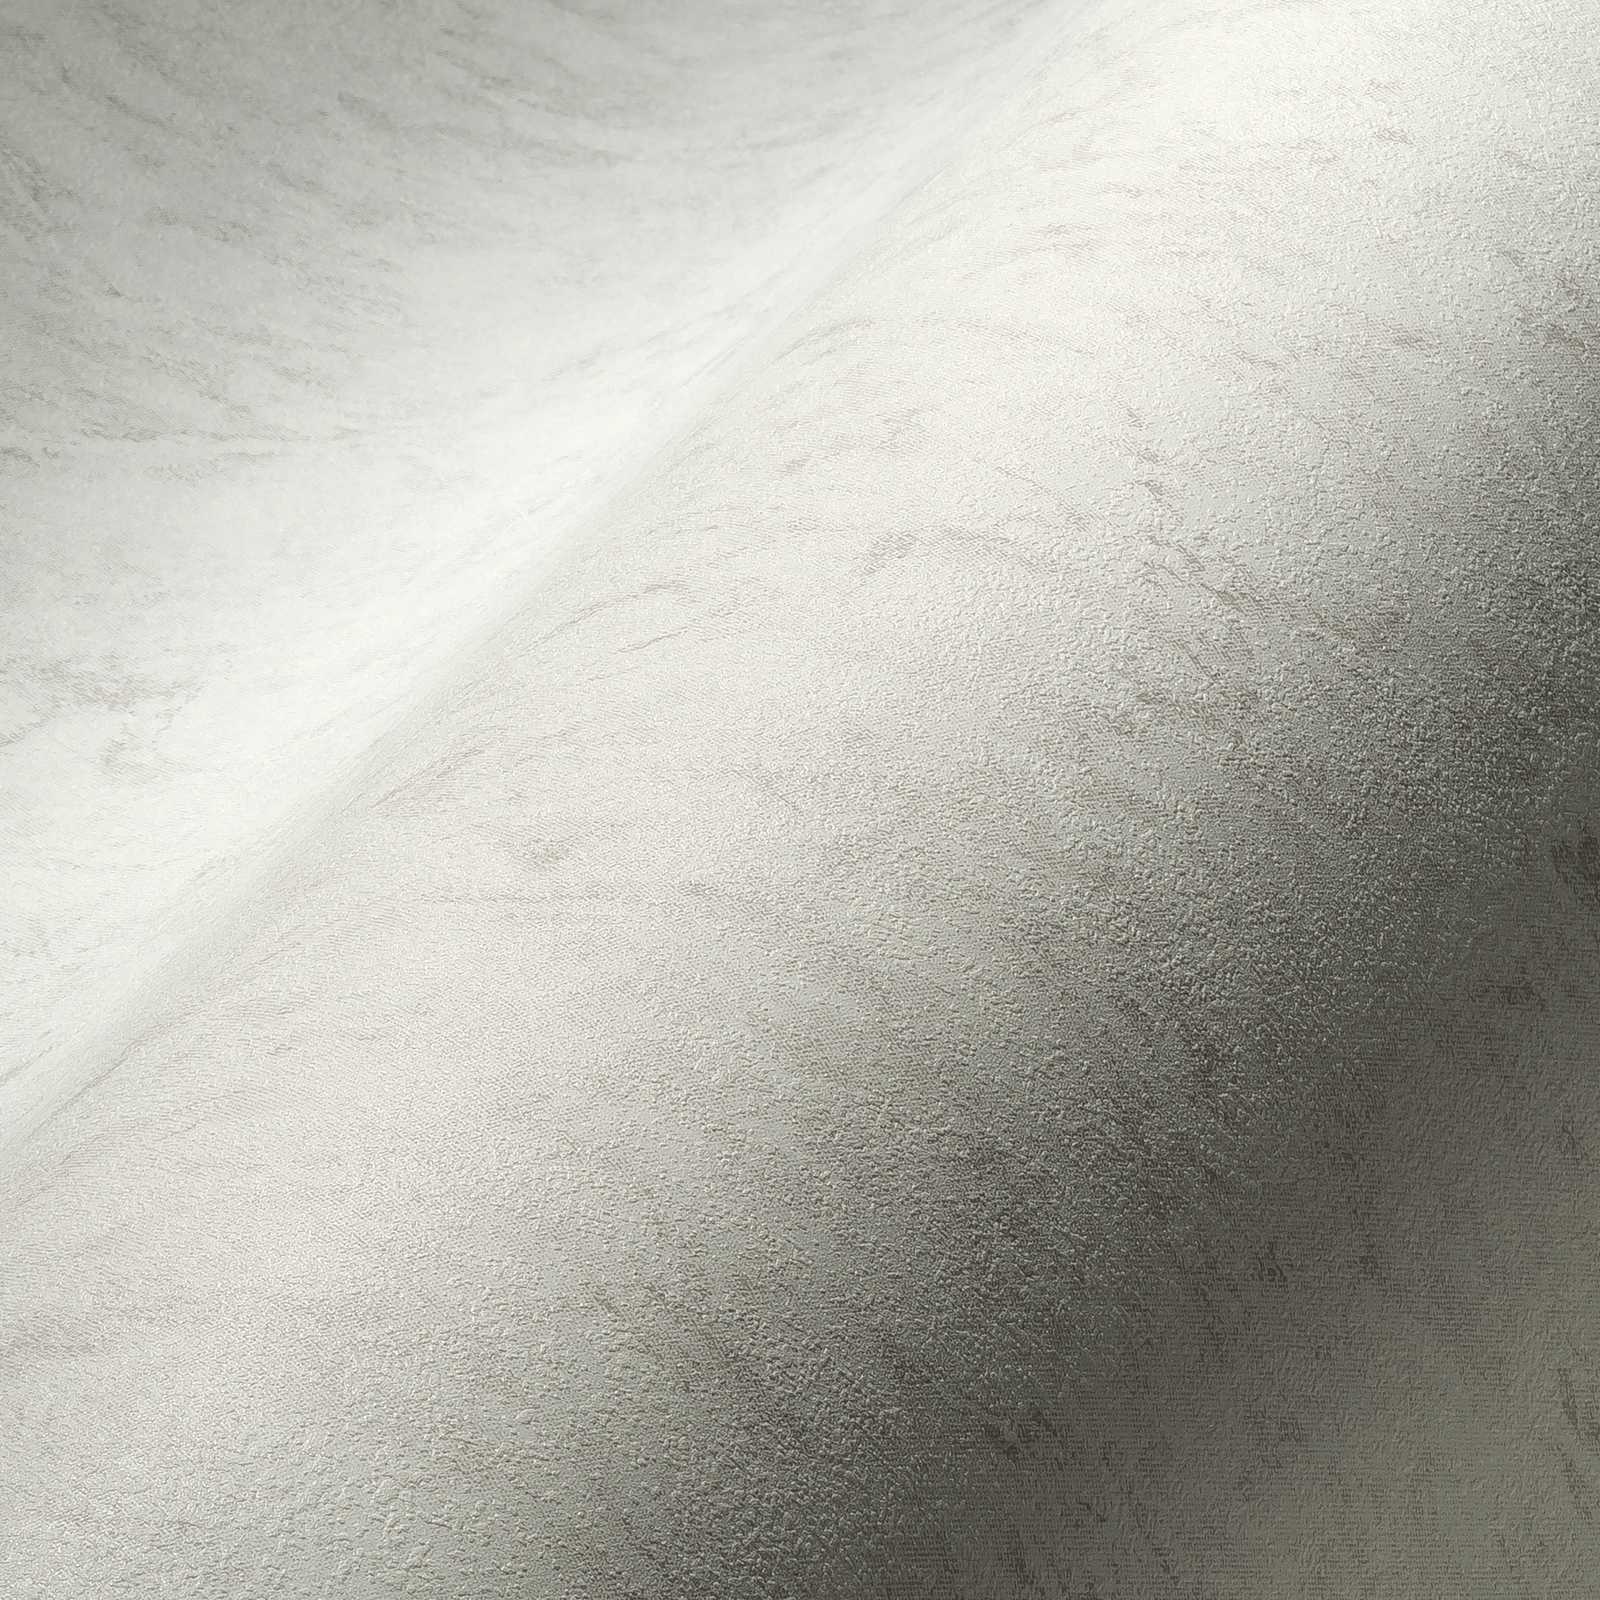             Plain wallpaper with texture effect & mottled design - grey, beige, cream
        